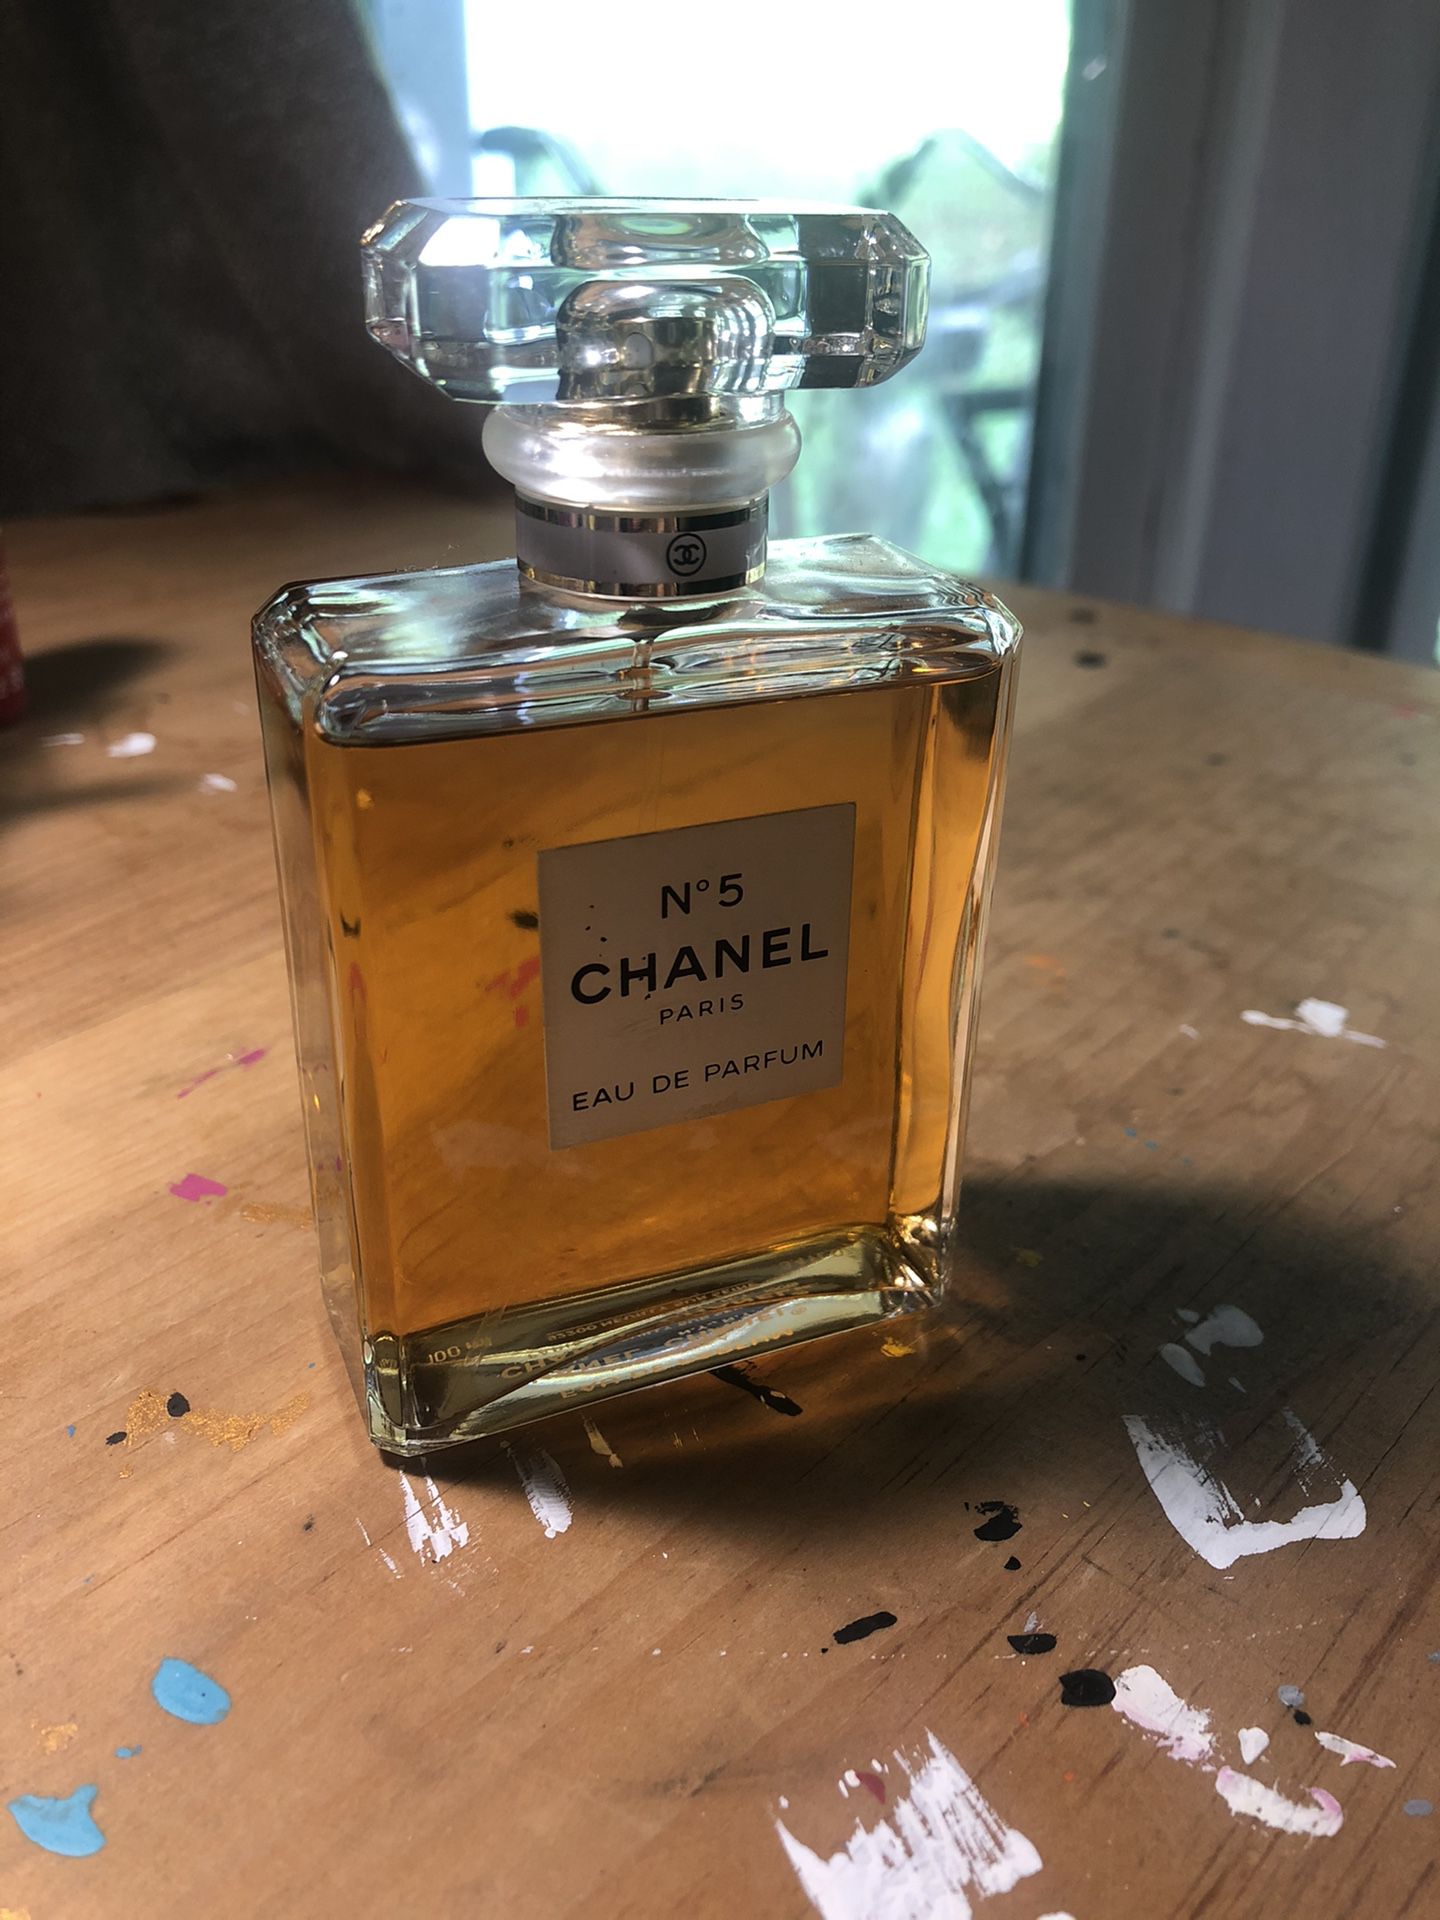 Chanel #5 perfume